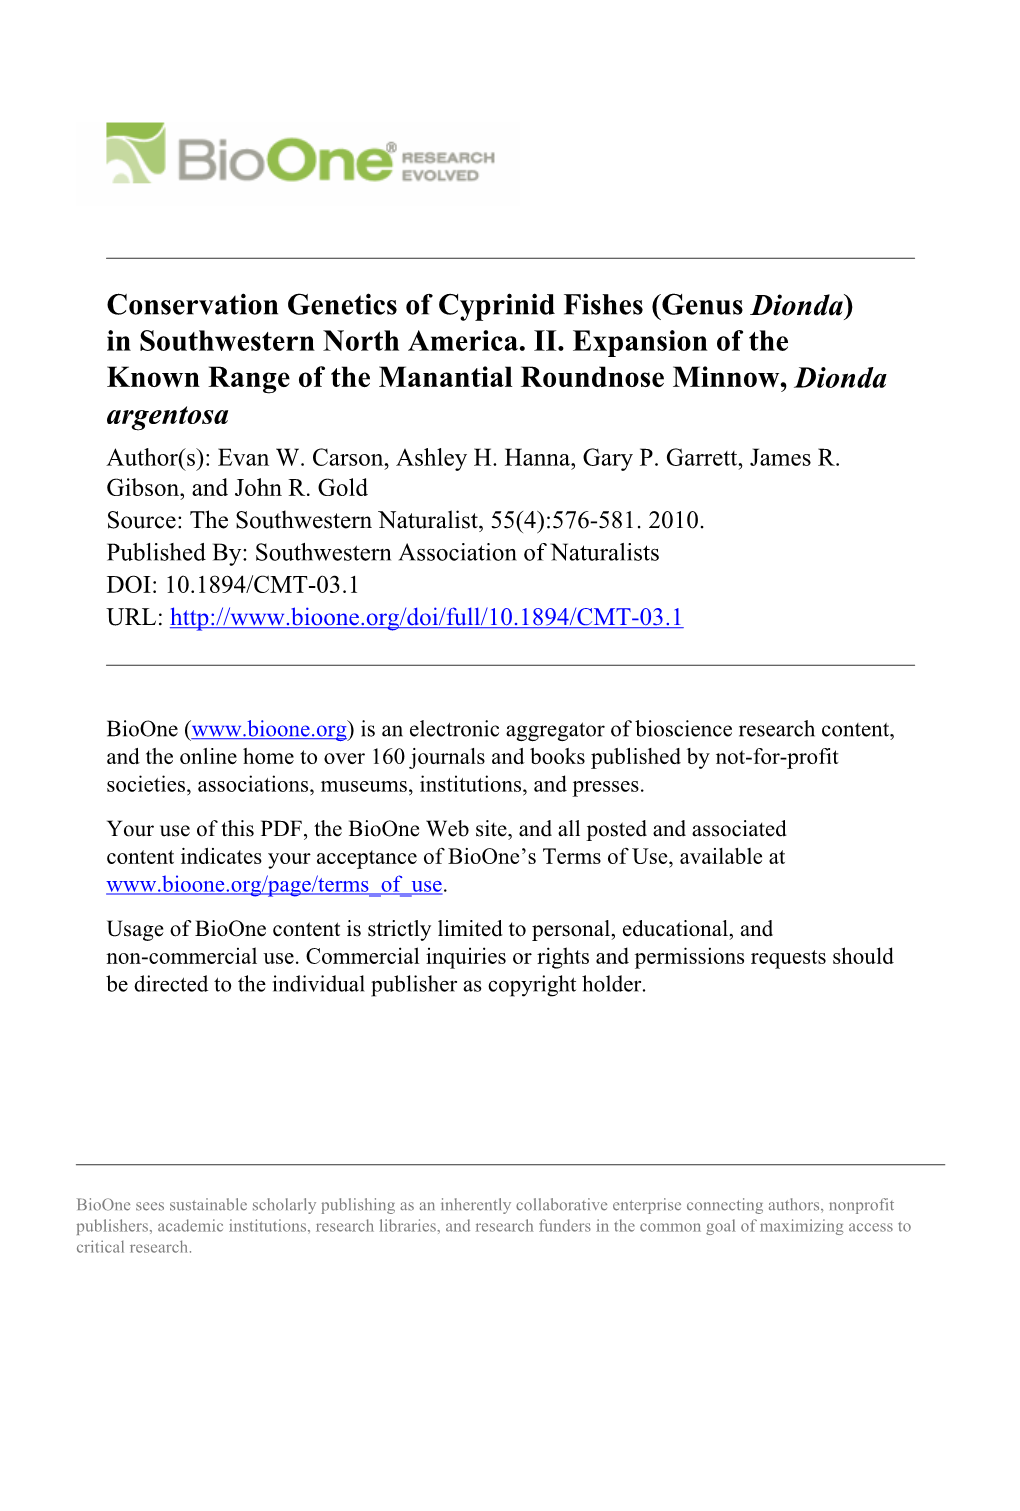 Conservation Genetics of Cyprinid Fishes (Genus Dionda) in Southwestern North America